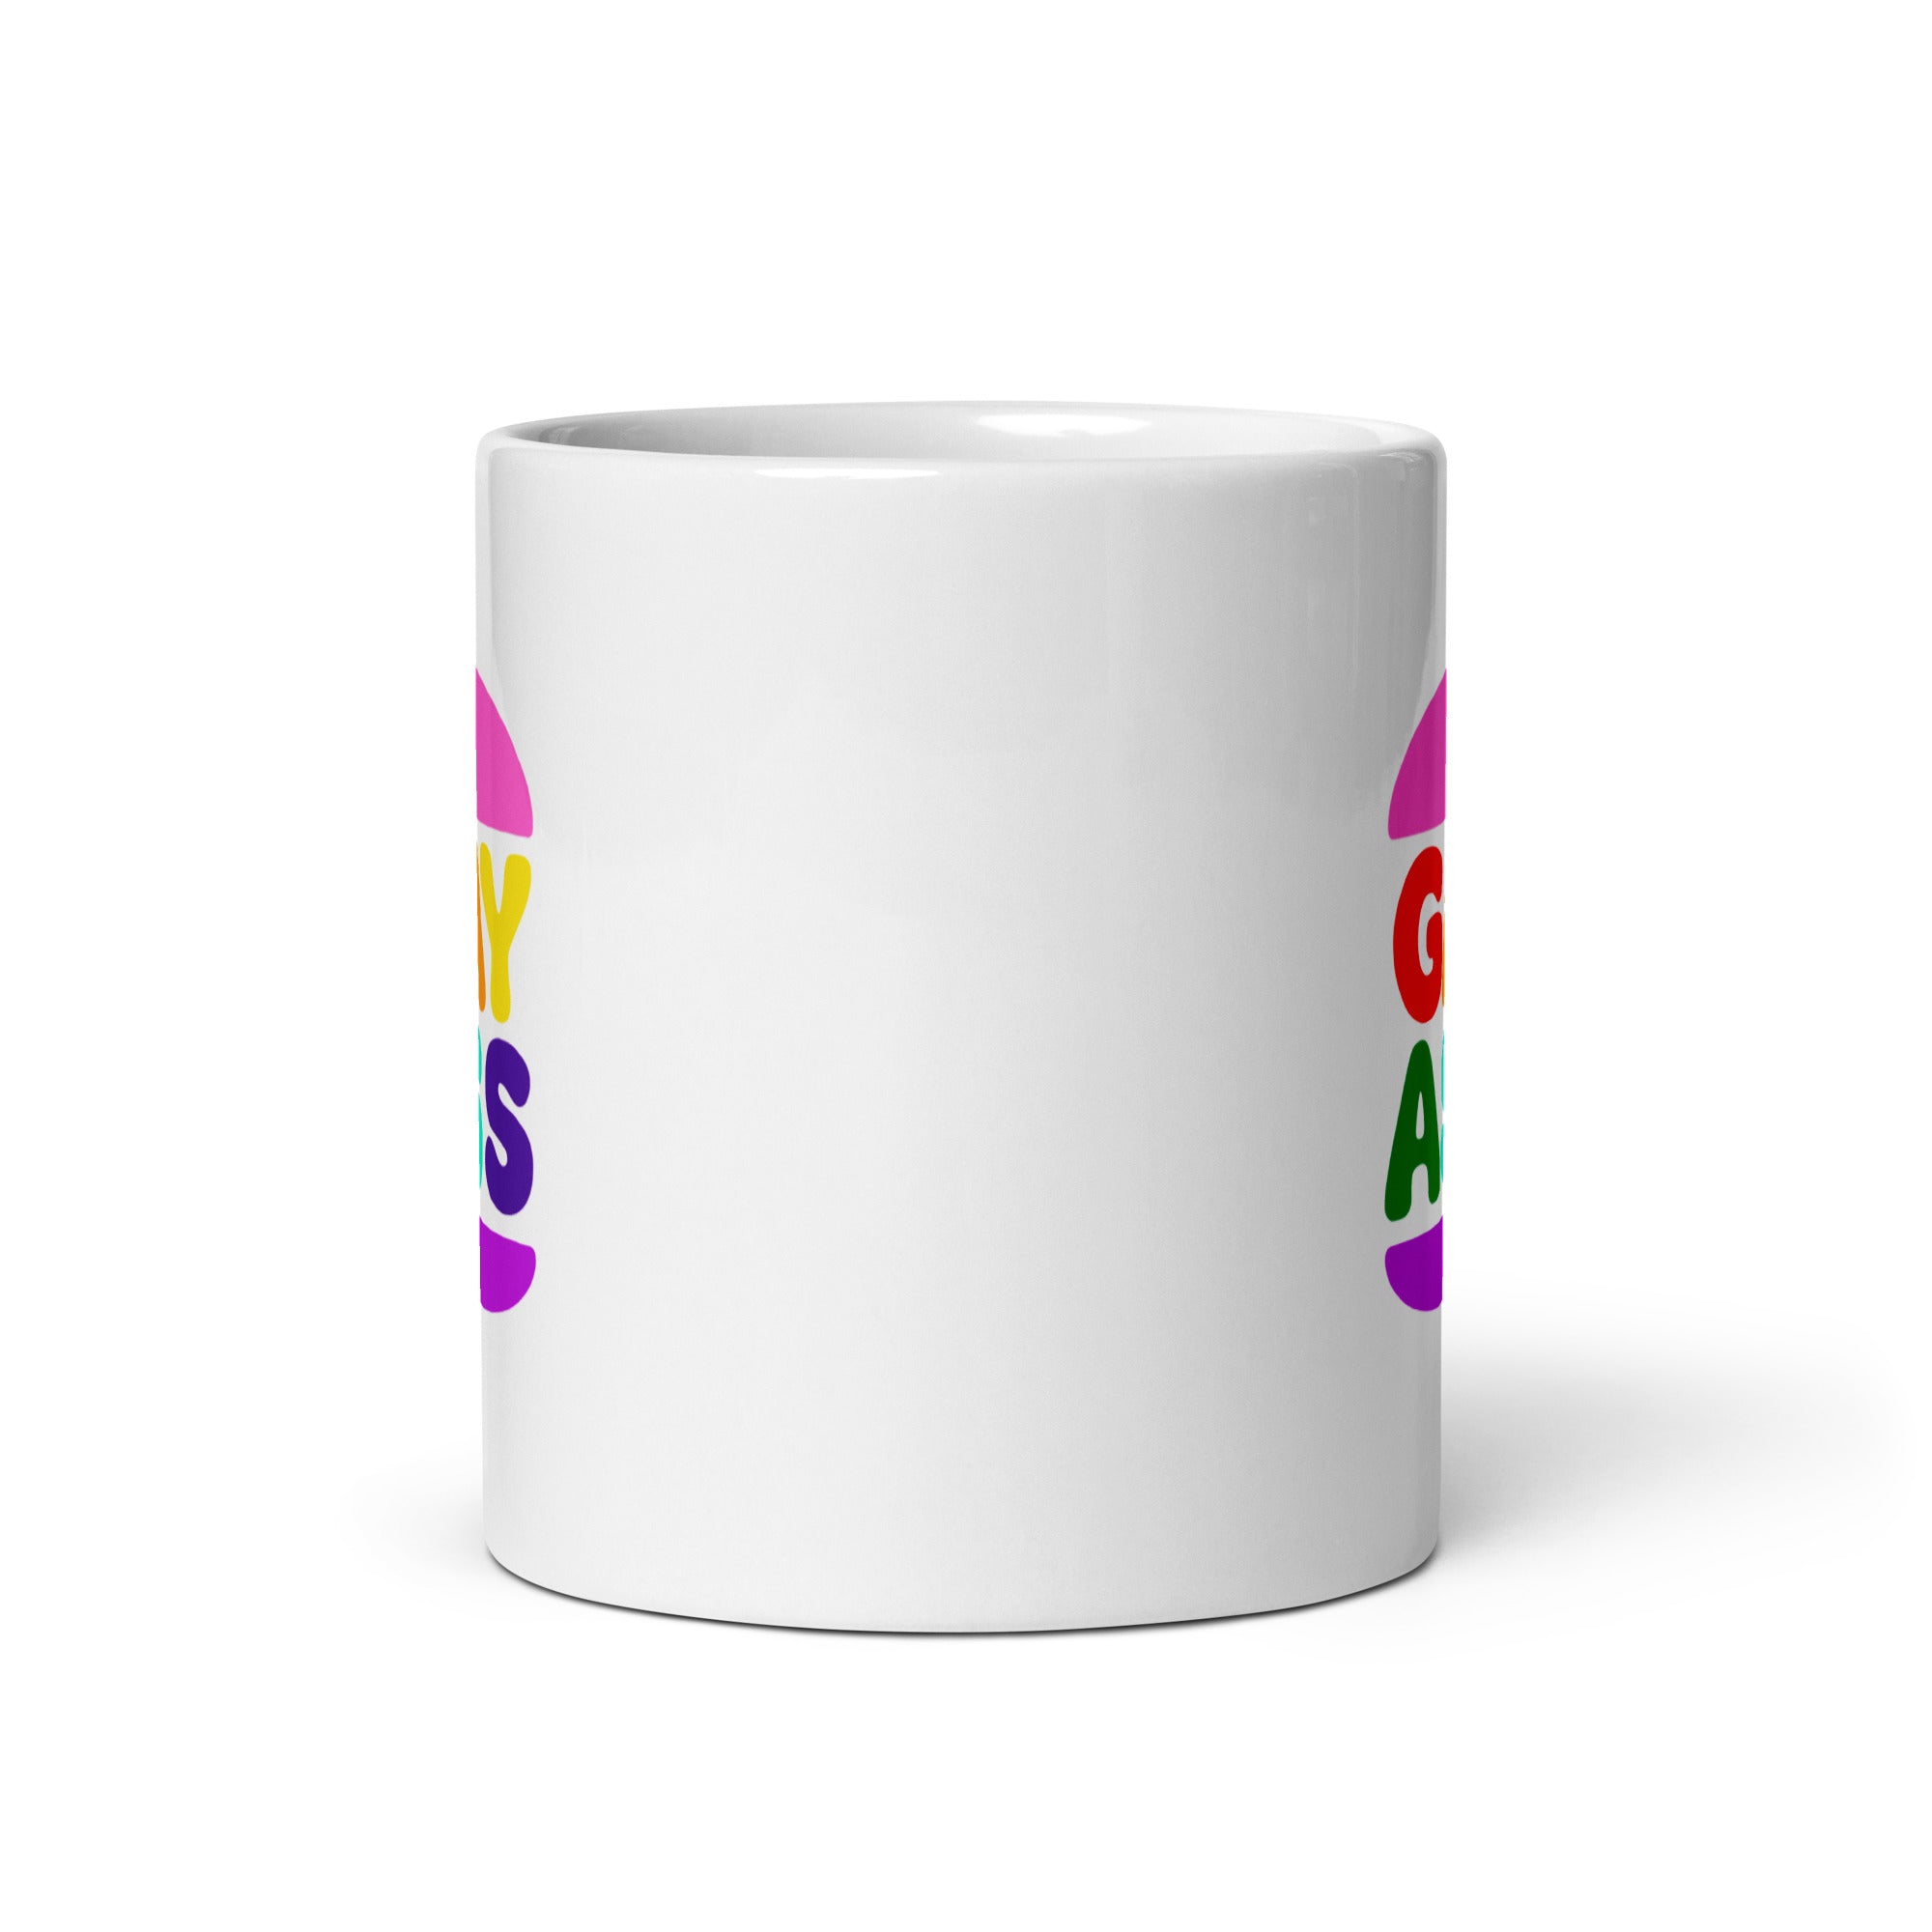 Gayass Rainbow Mug